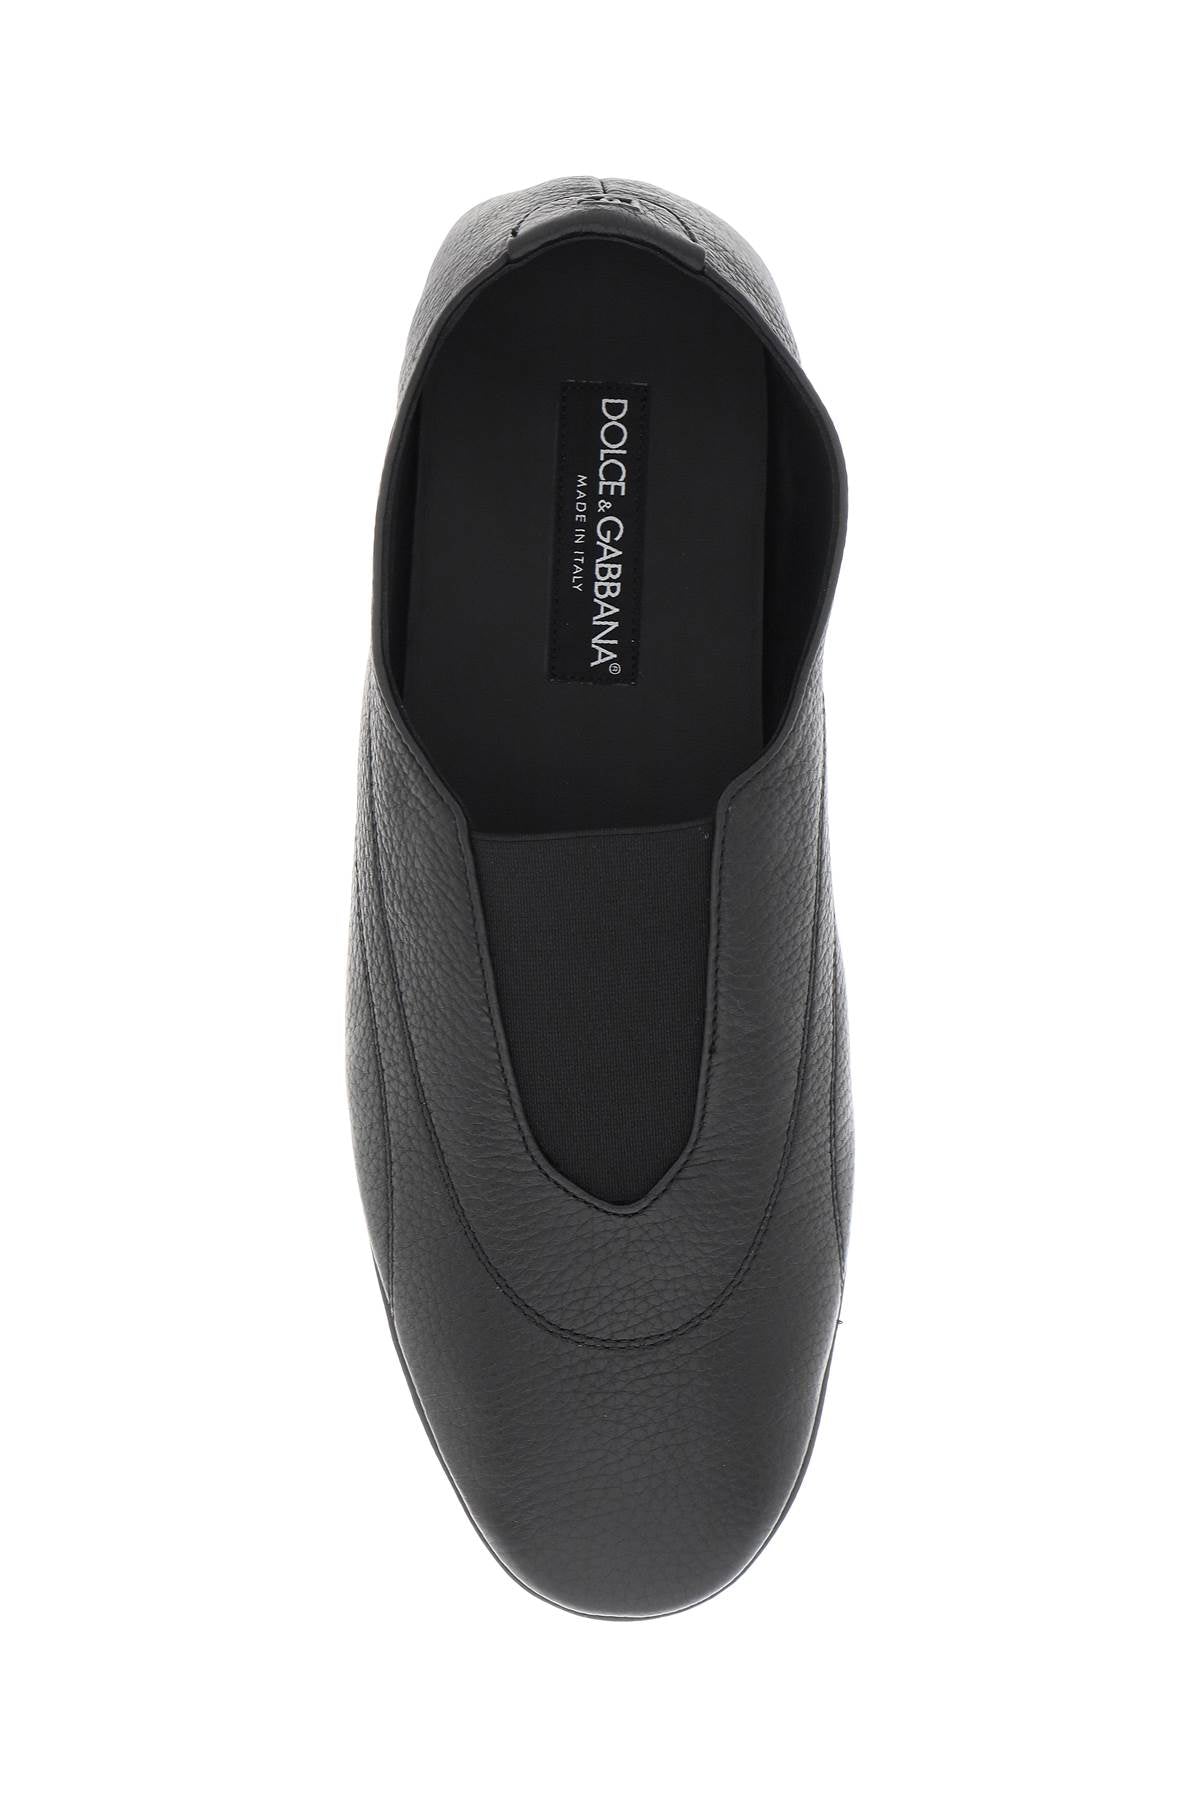 Dolce & gabbana leather slipper for-1